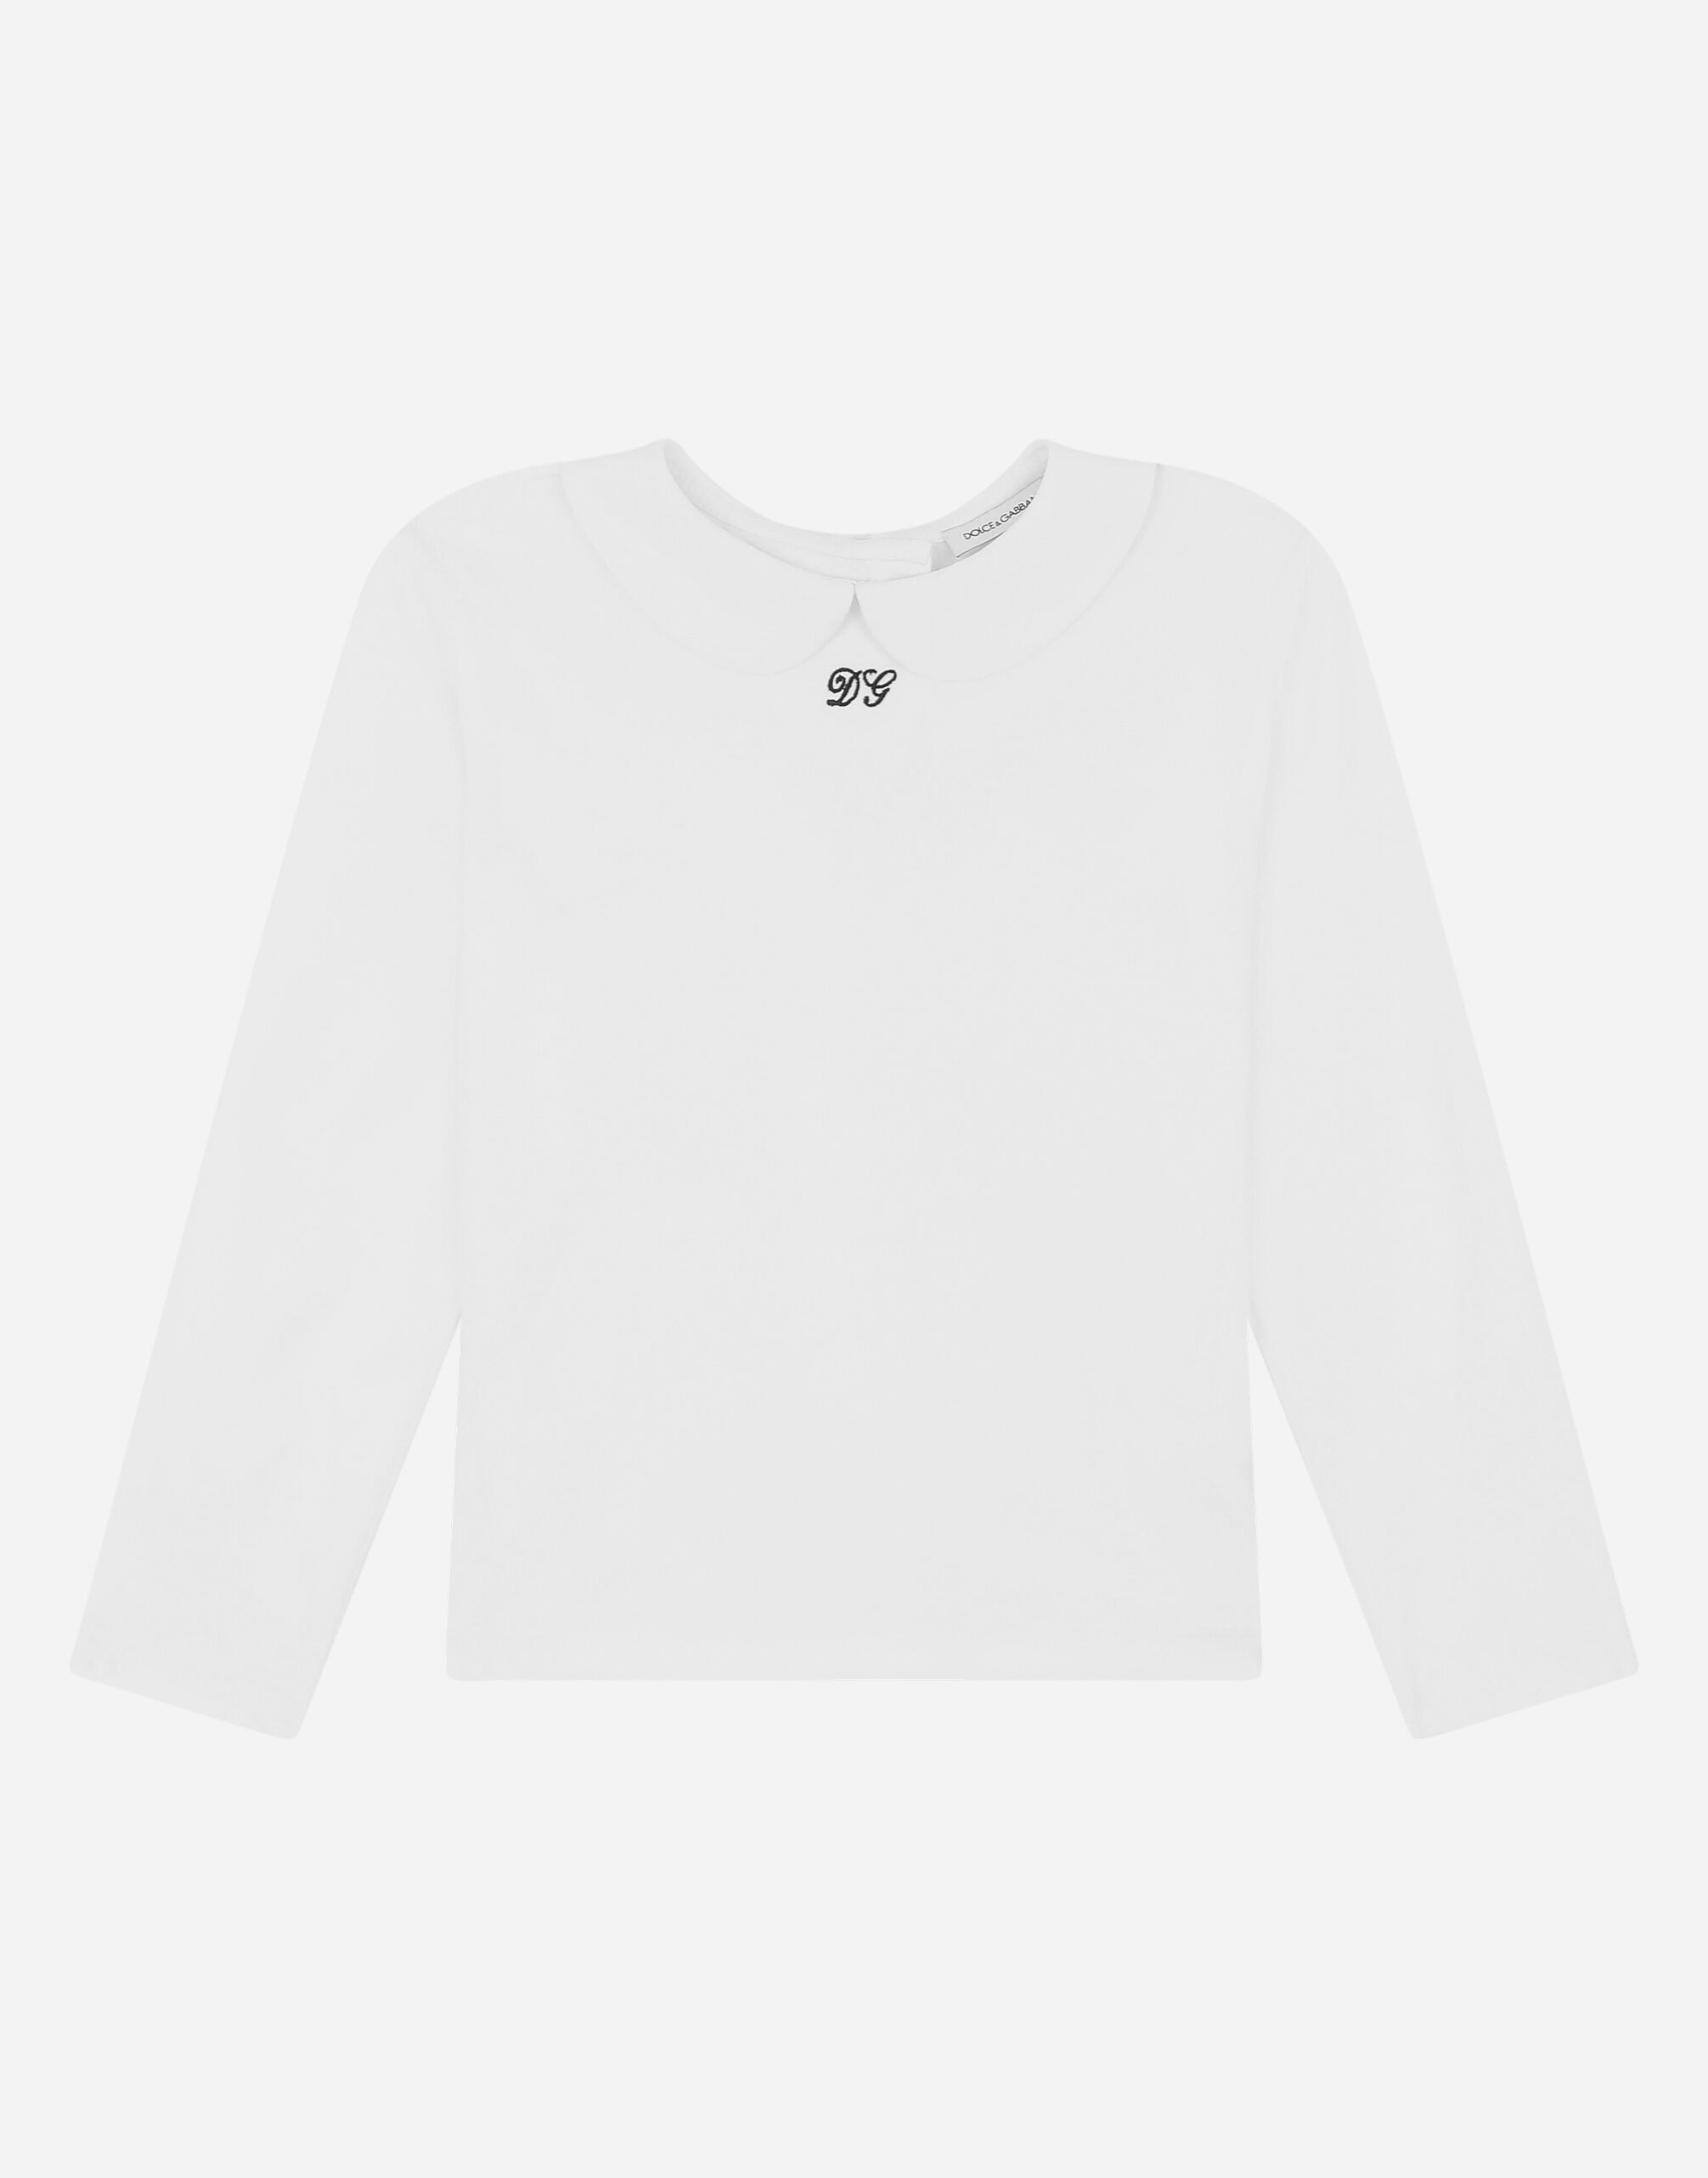 Dolce & Gabbana Jersey T-shirt with DG embroidery White L5JTAZG7B6N